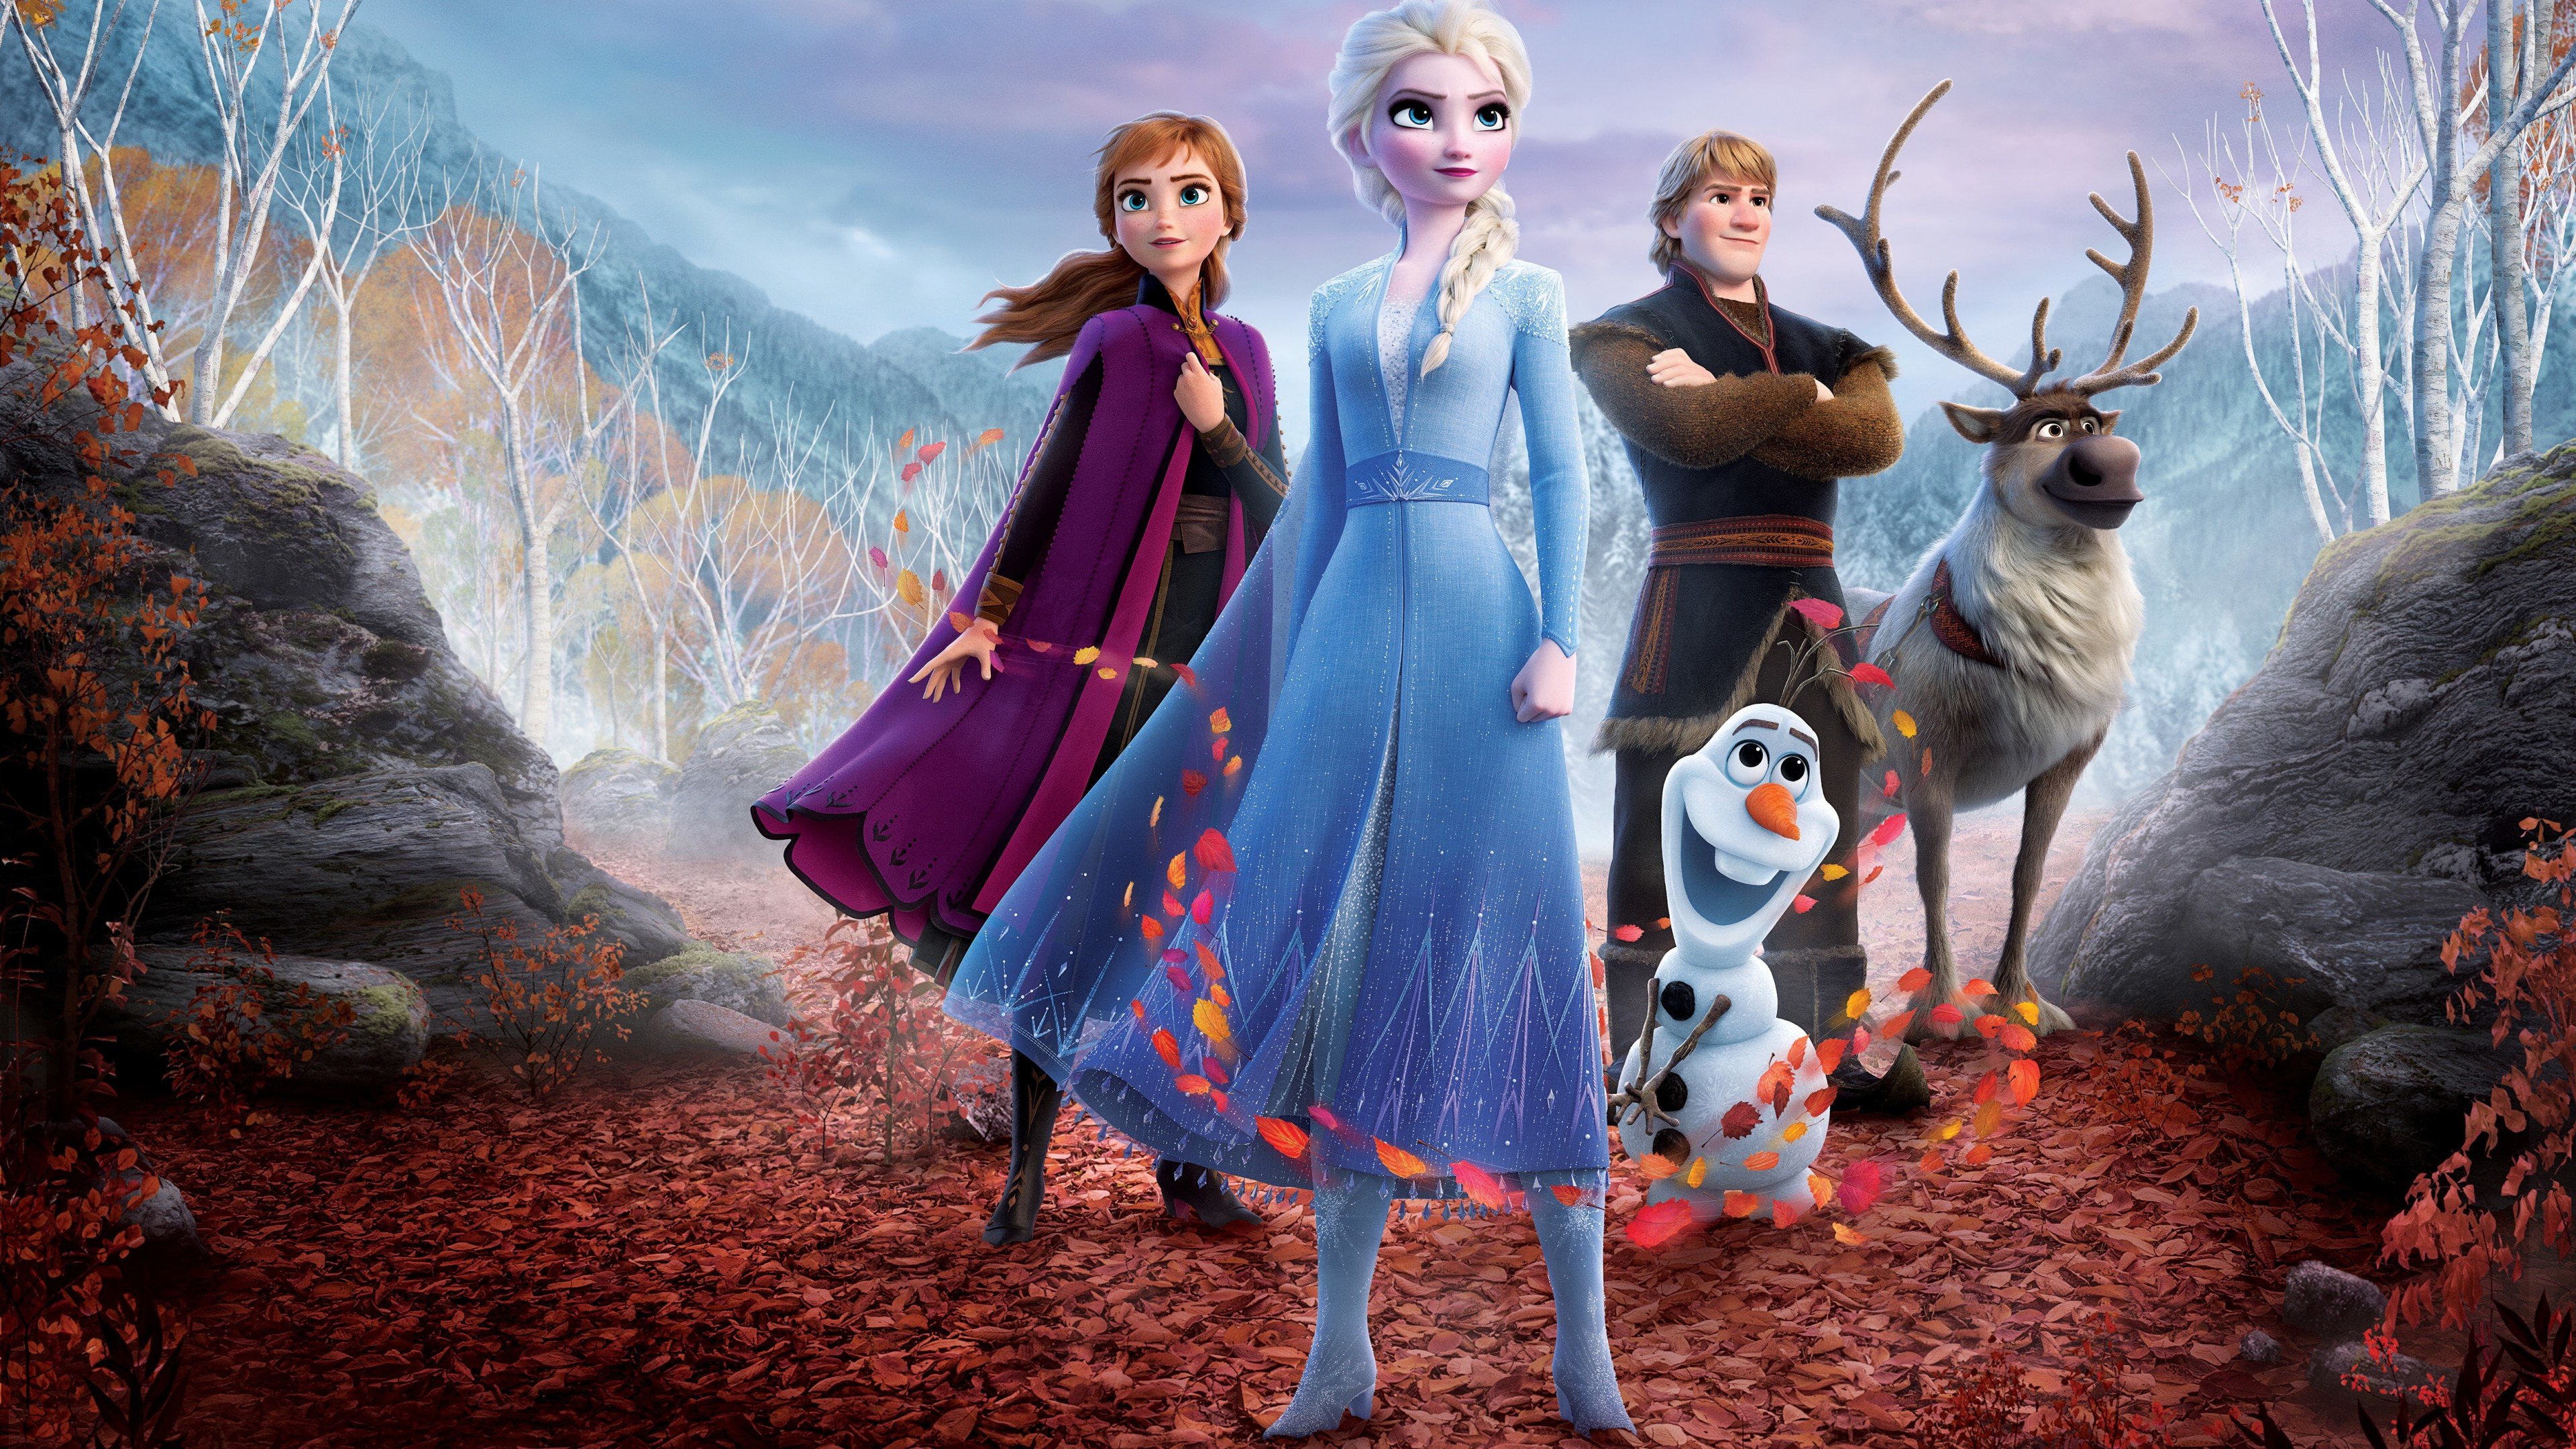 Frozen 2 animation, UHD TV wallpapers, 3840x2160 4K Desktop